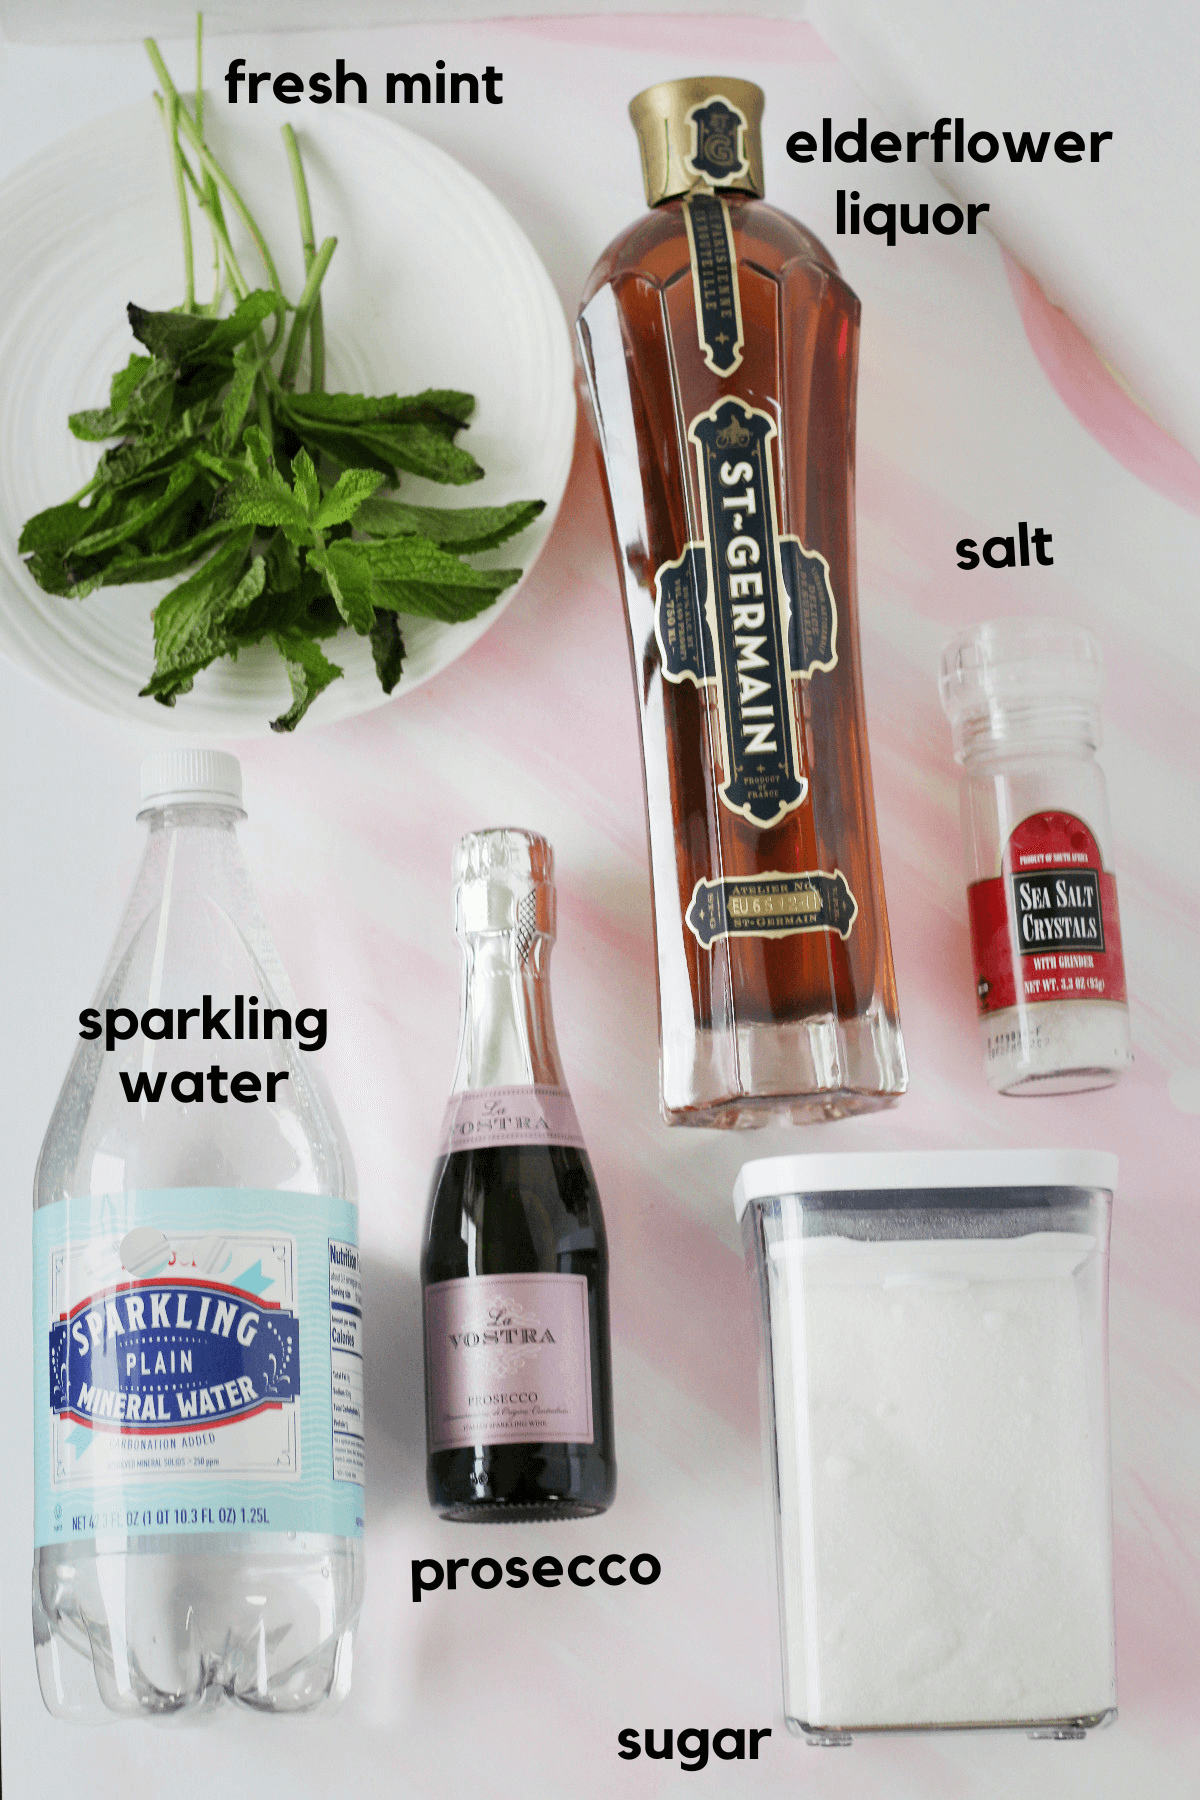 Ingredients laied out for a hugo spritz: sparkling water, prosecco, sugar, salt, elderflower liquor and fresh mint.